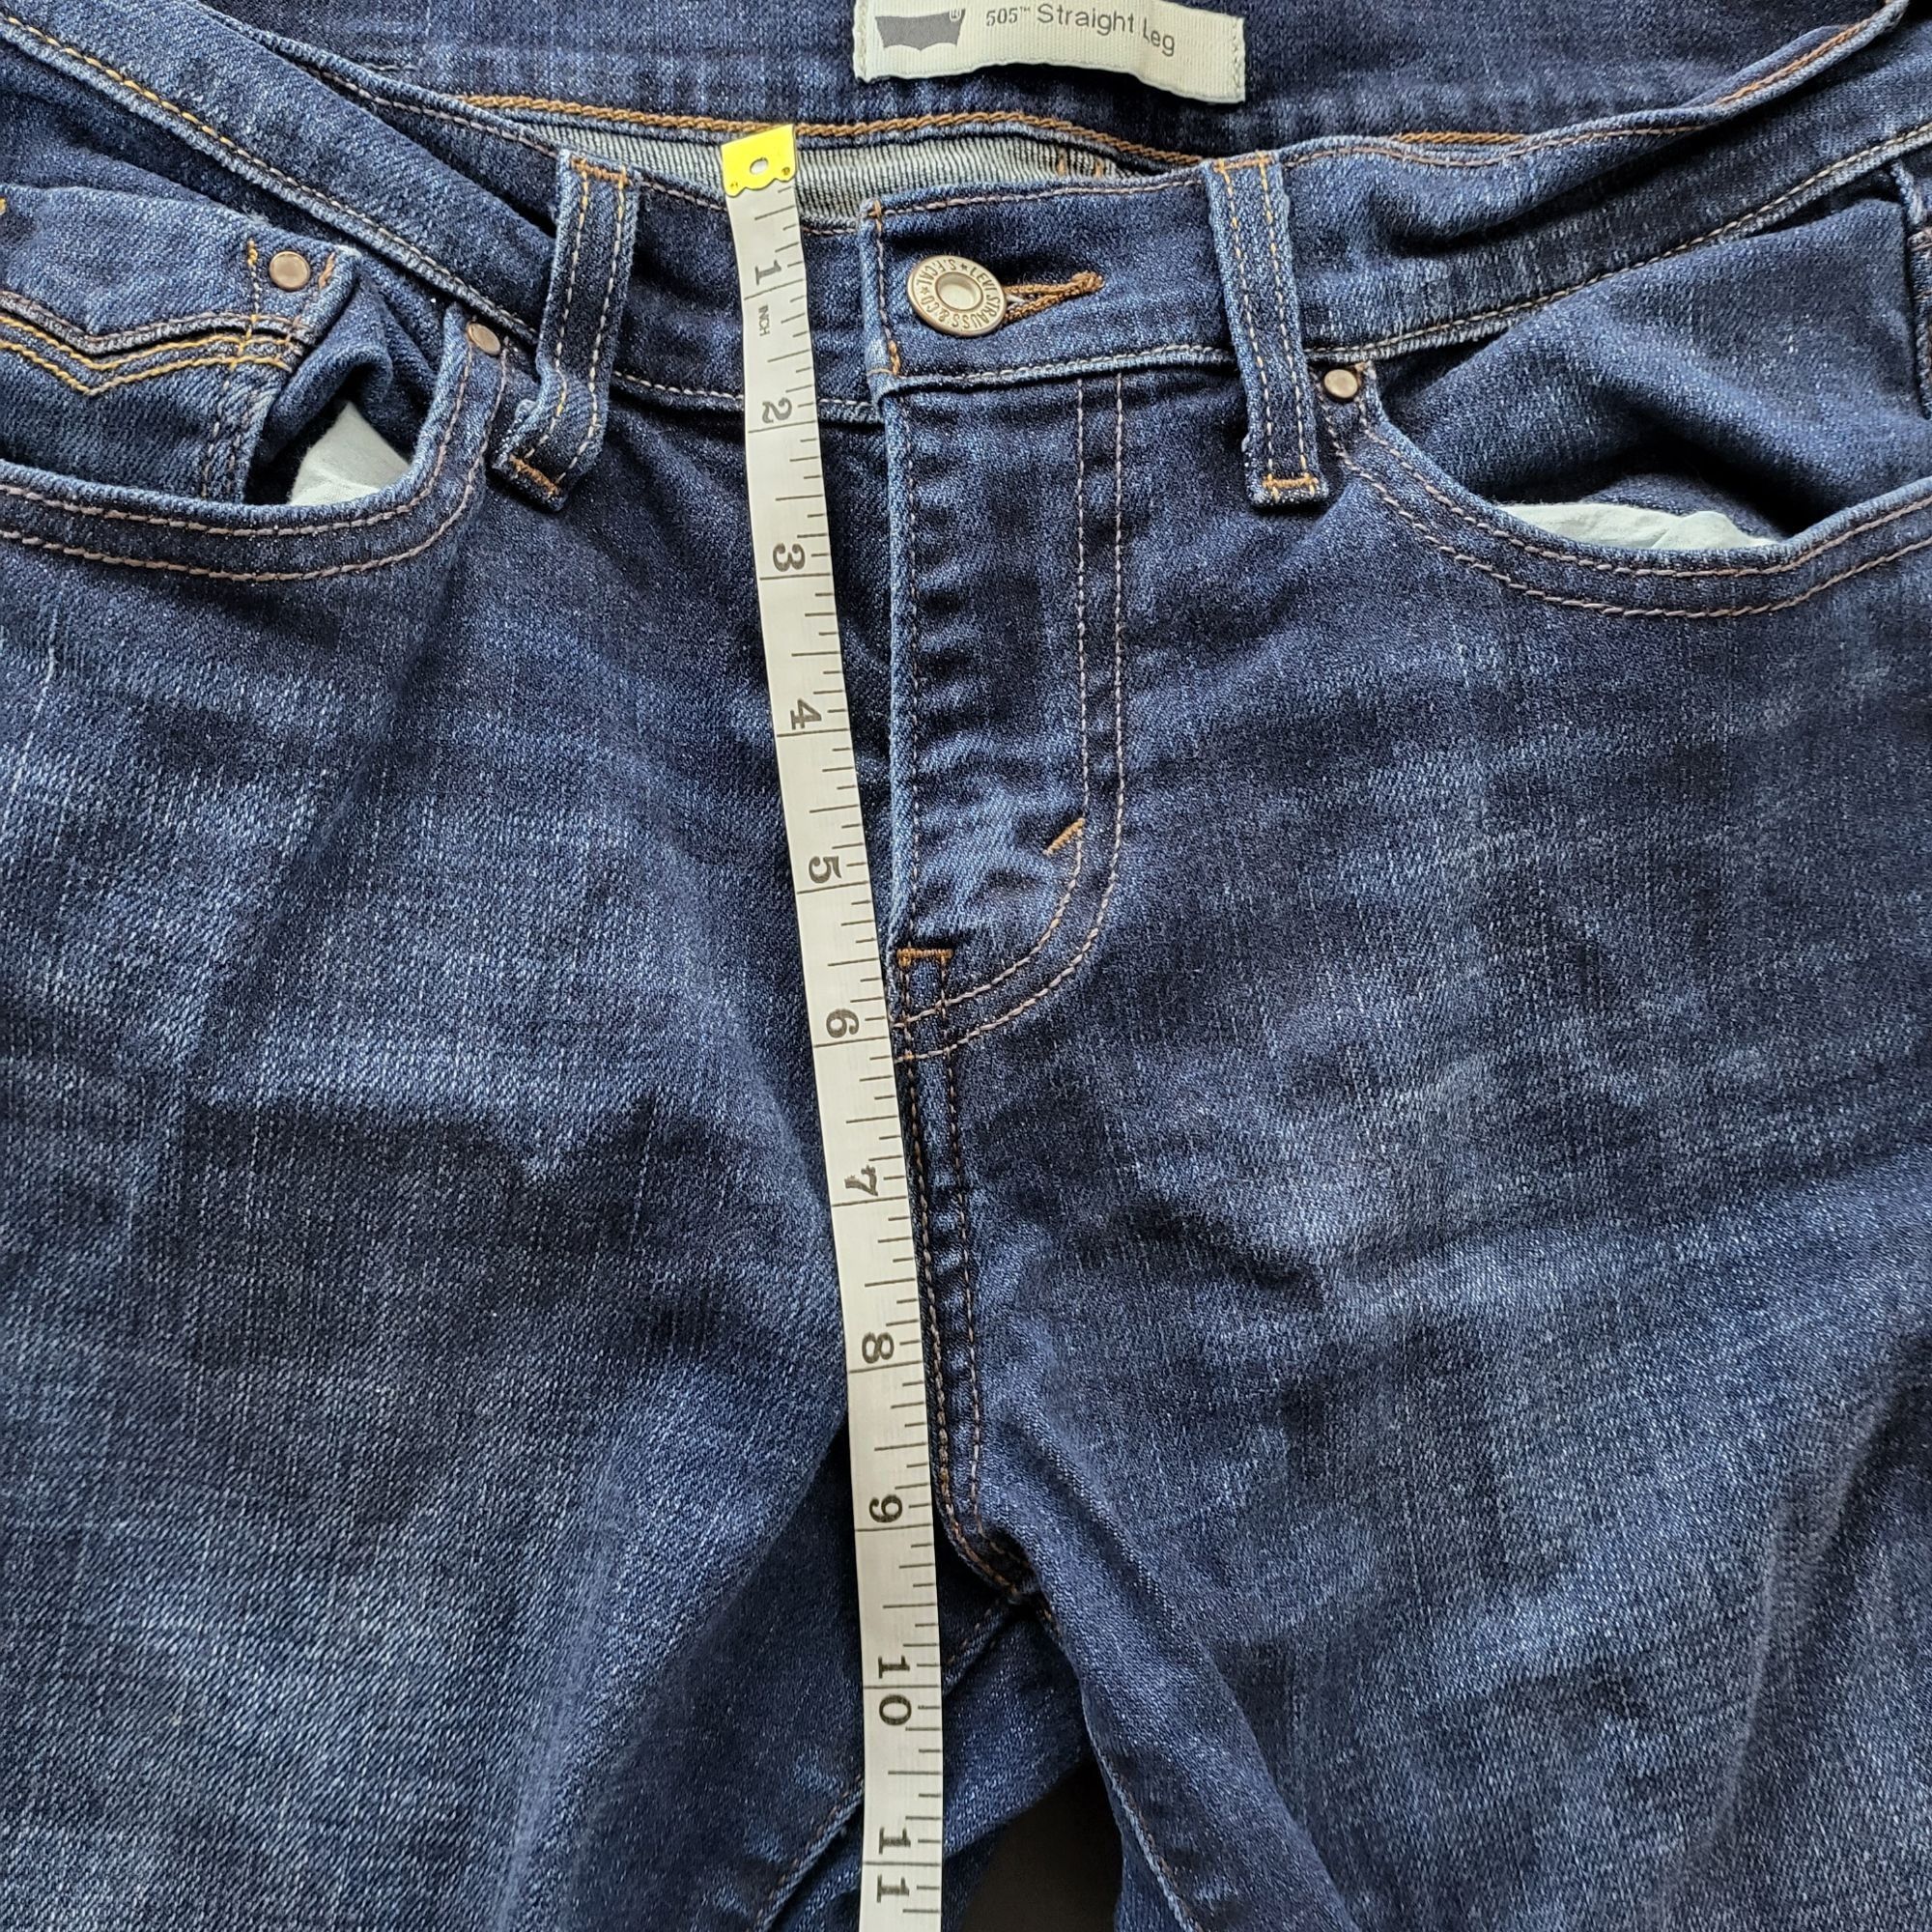 Levi's Levi's 505 Straight Leg Denim Blue Jeans Women's Size 27/30 Size 27" / US 4 / IT 40 - 9 Thumbnail